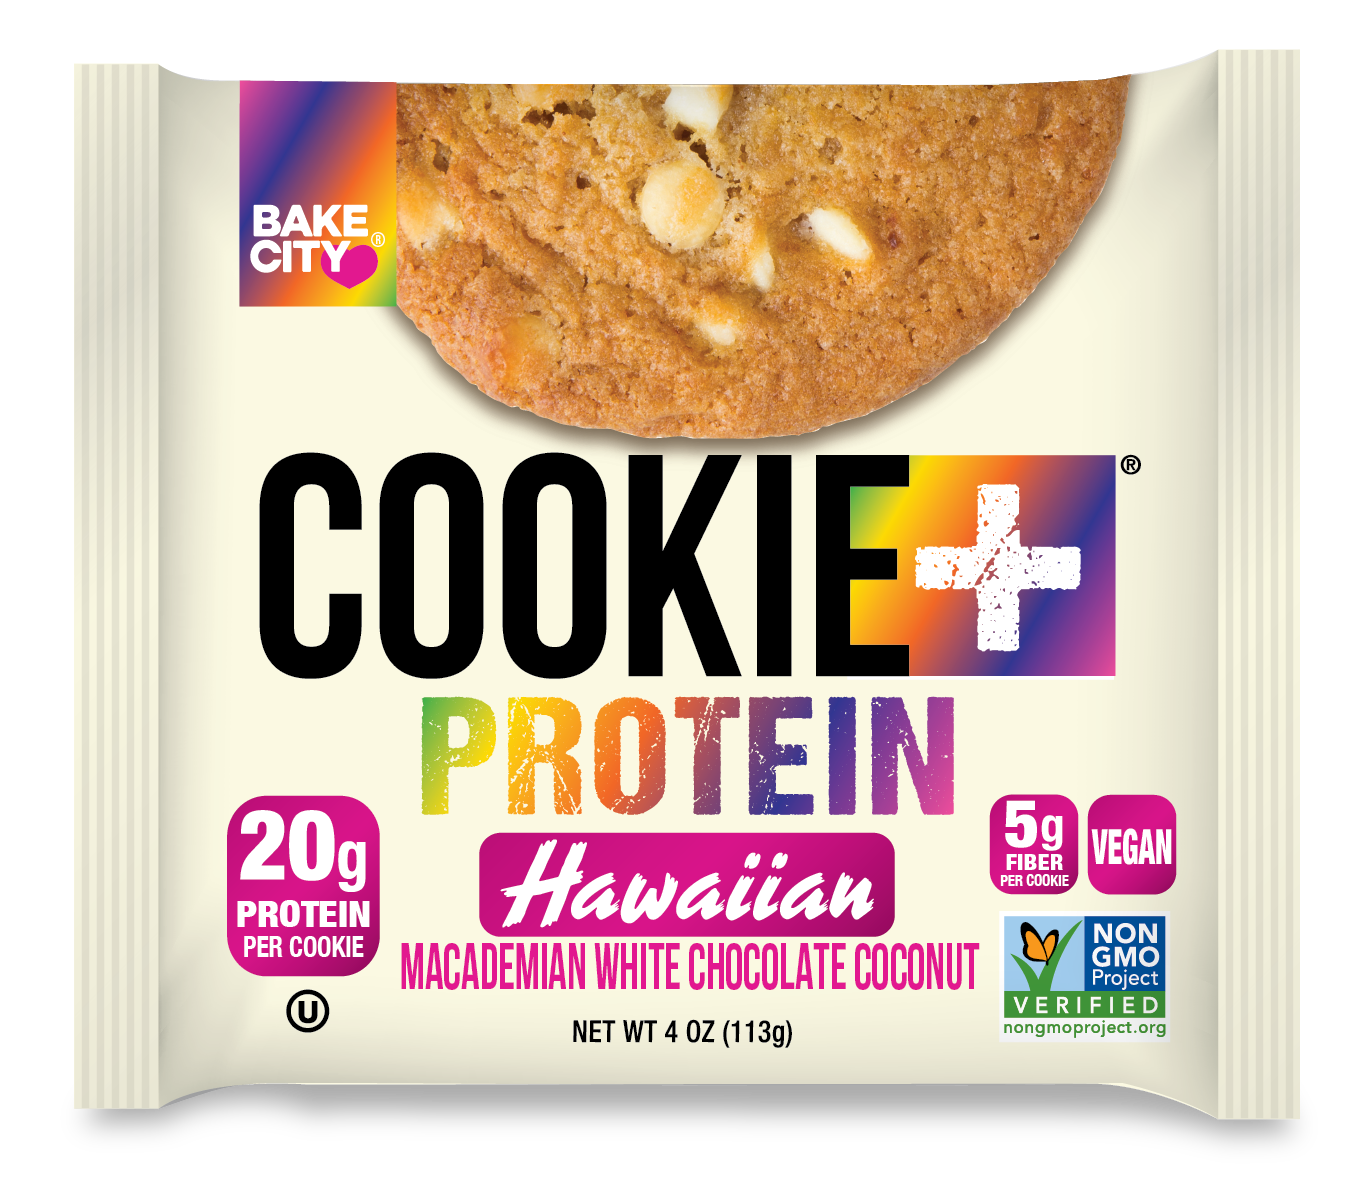 Cookie+ Protein Hawaiian - Cookie+ Protein